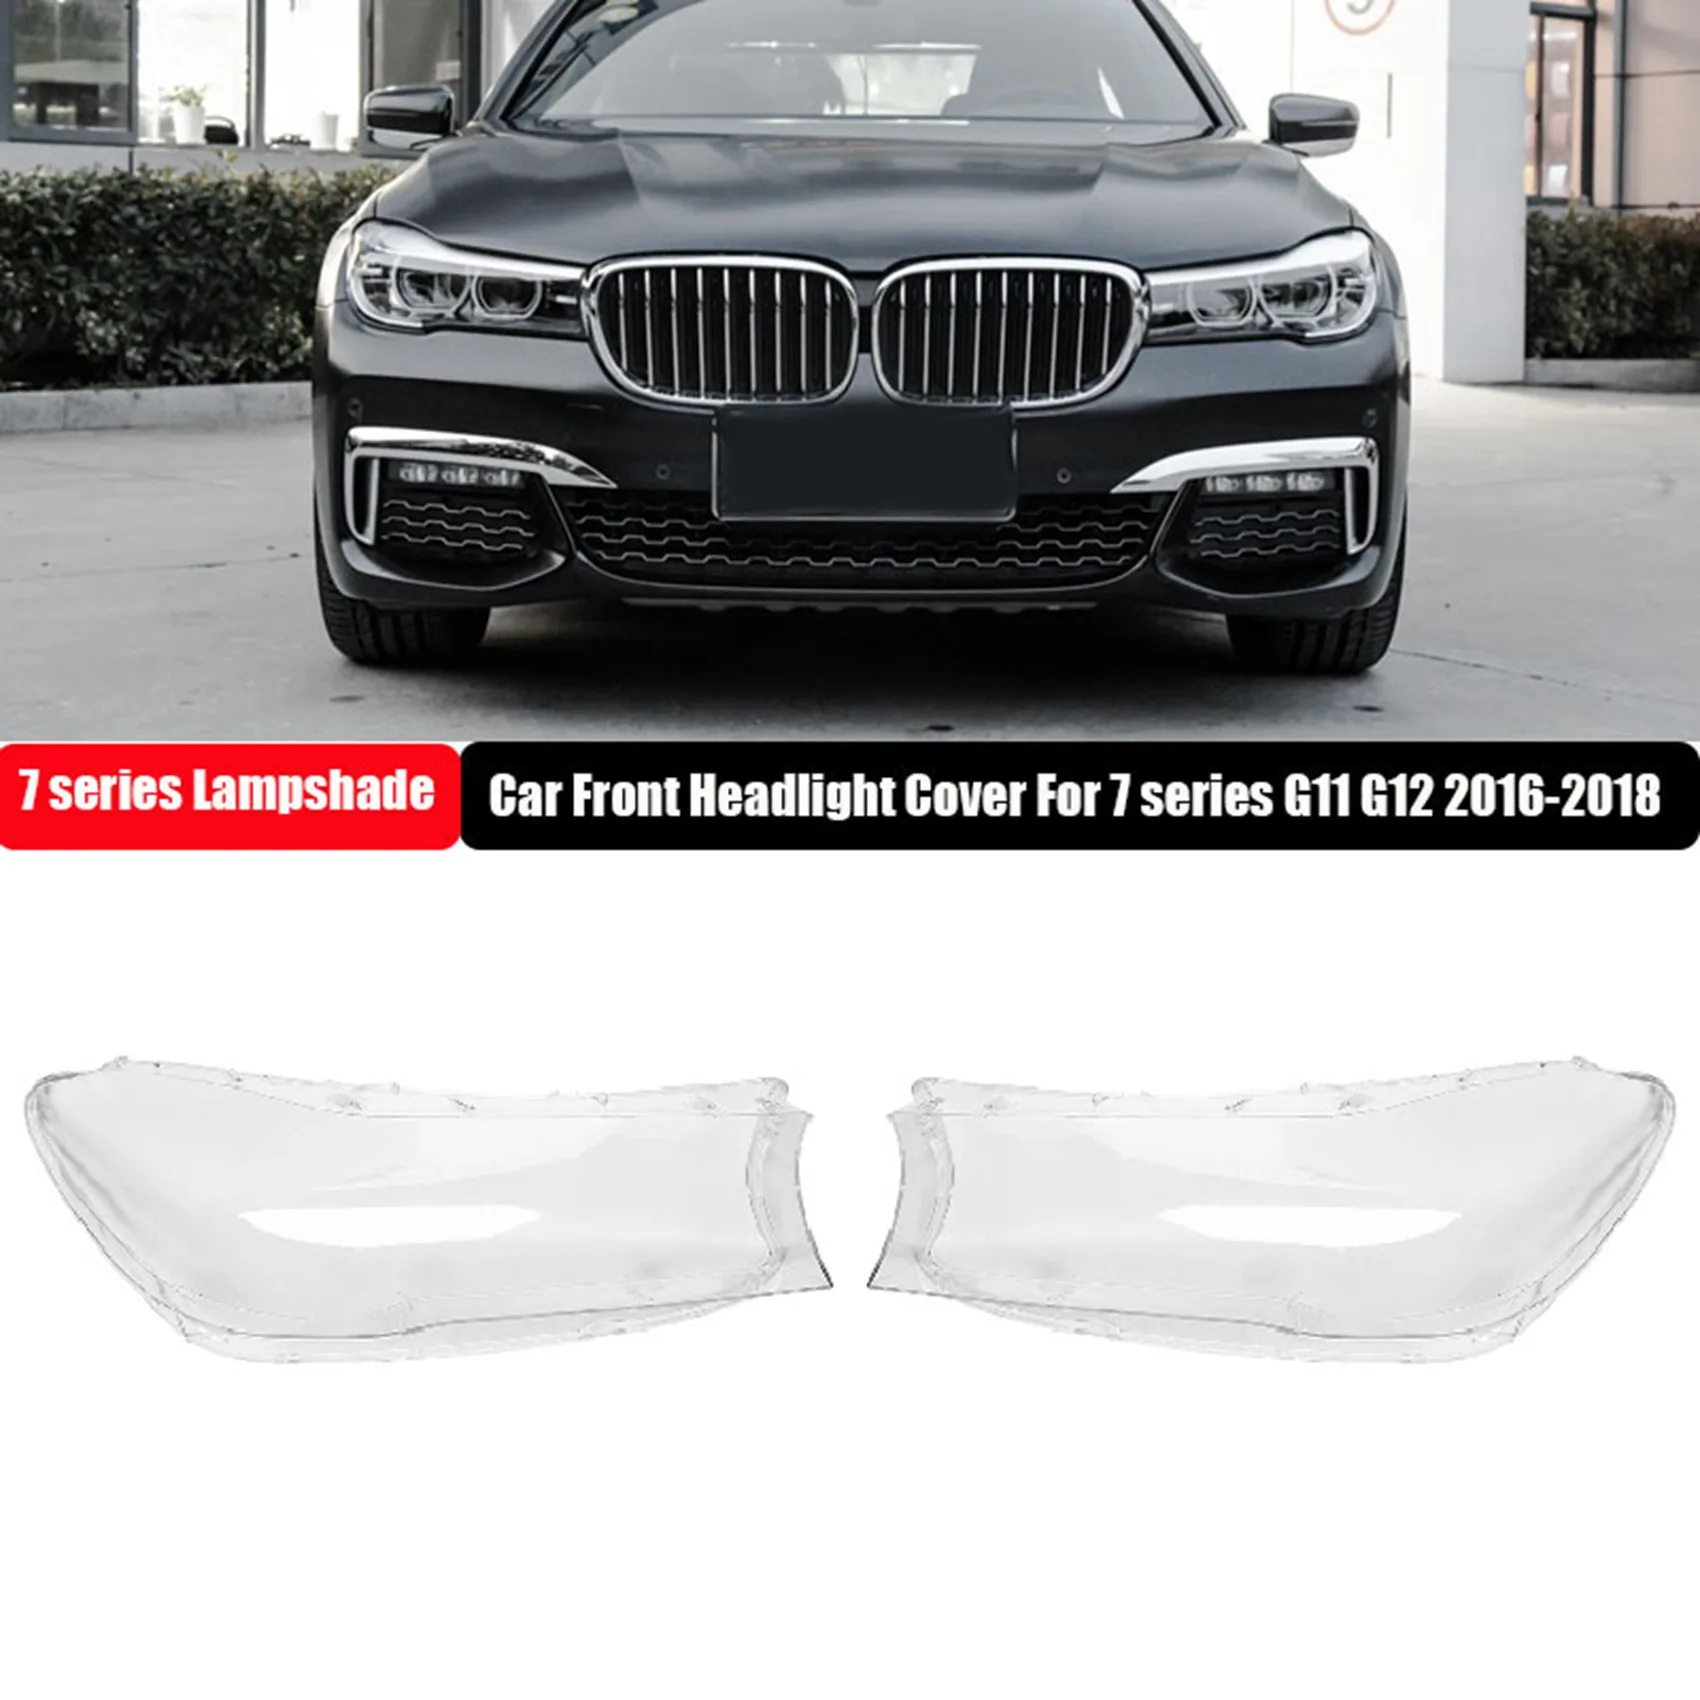 

Car Front Headlight Cover Head Light Lampshade Glass Lens Shell For BMW 7 Series G11 G12 730Li 740Li 2016-2018